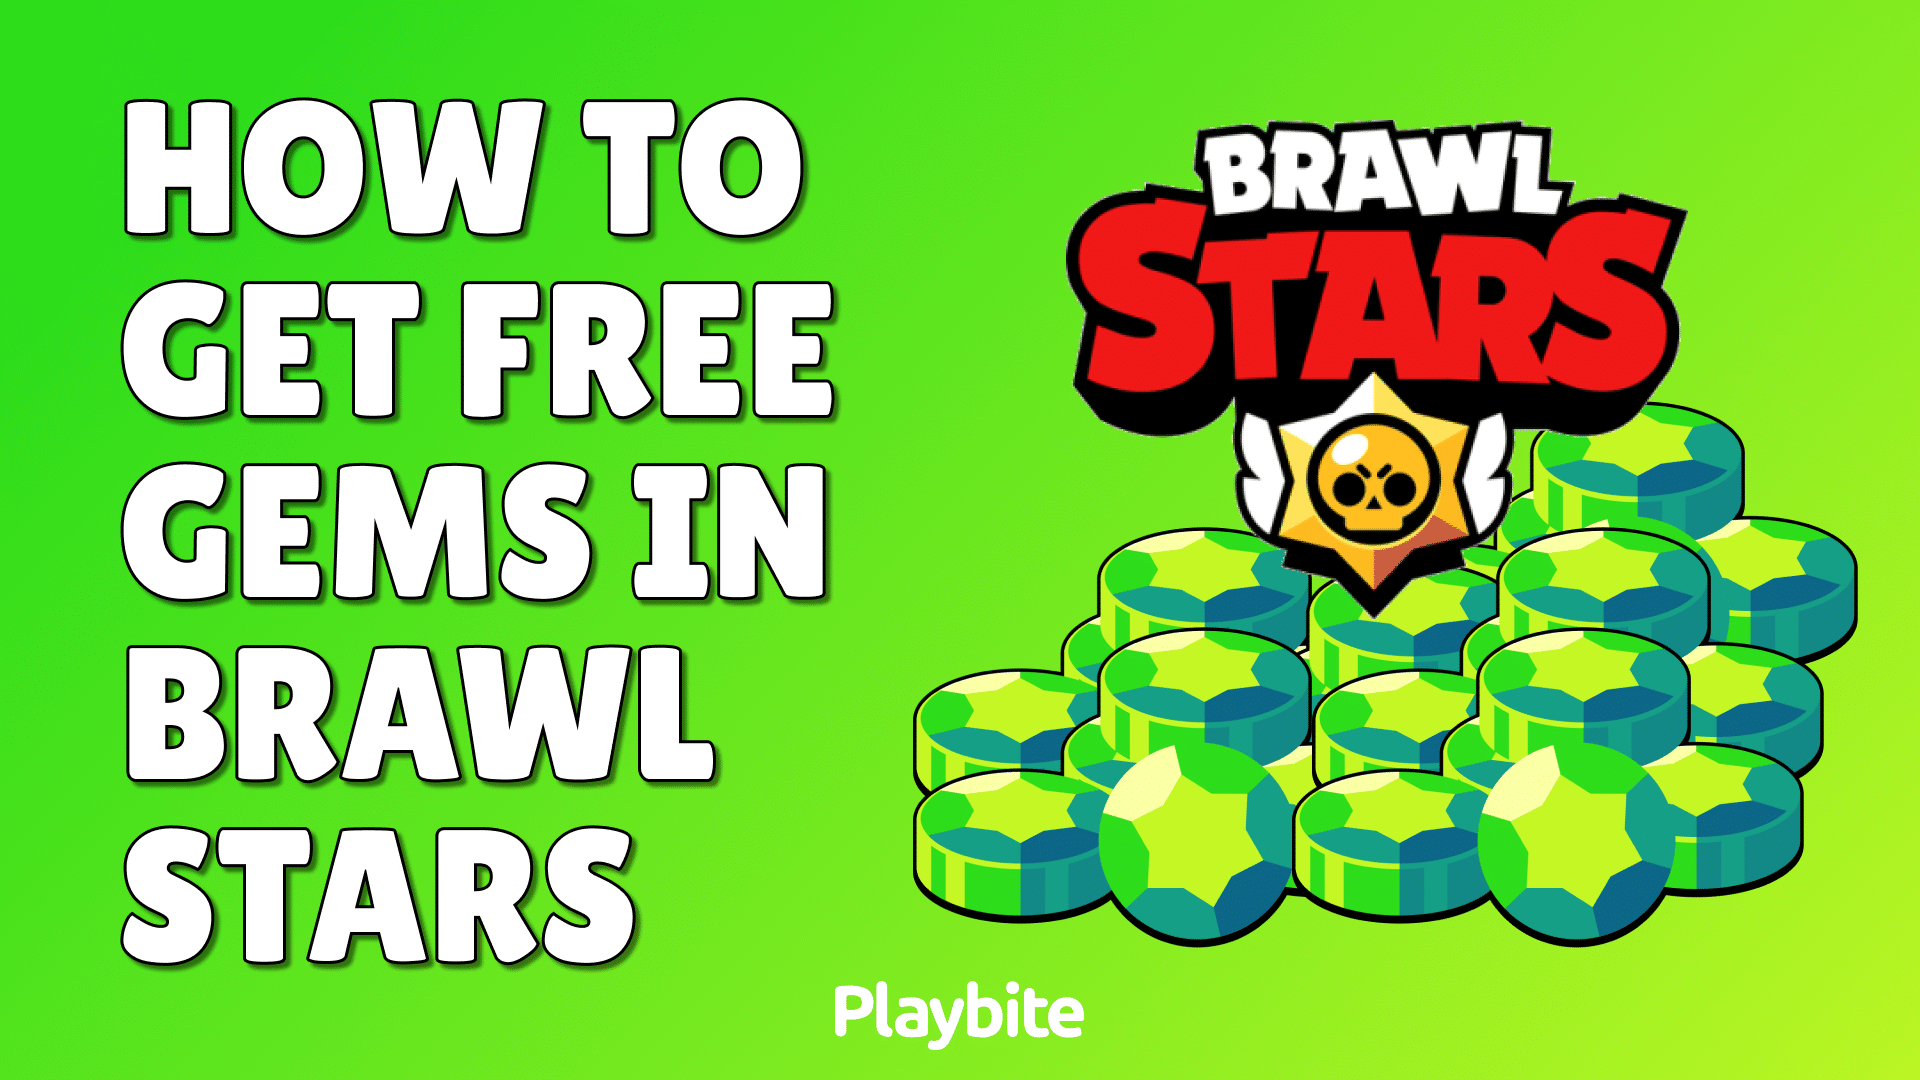 Latest Brawl Stars Redeem Codes for Free Rewards: Gems & Star Points